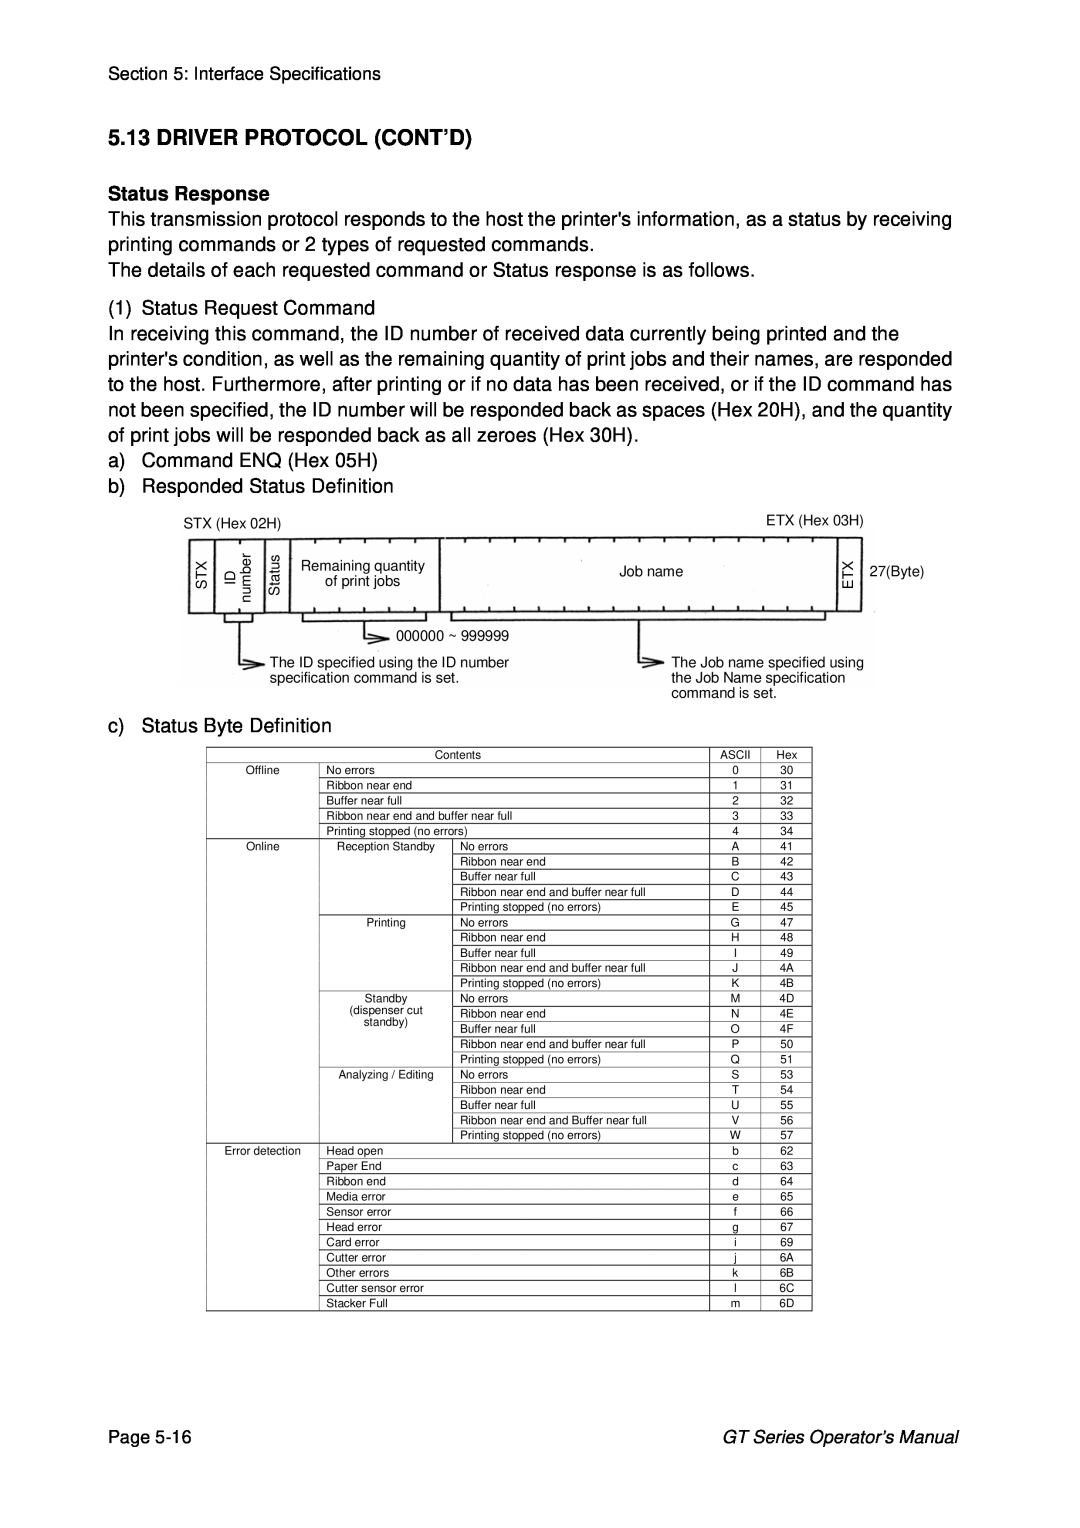 SATO GT424 manual Driver Protocol Cont’D, Status Response 